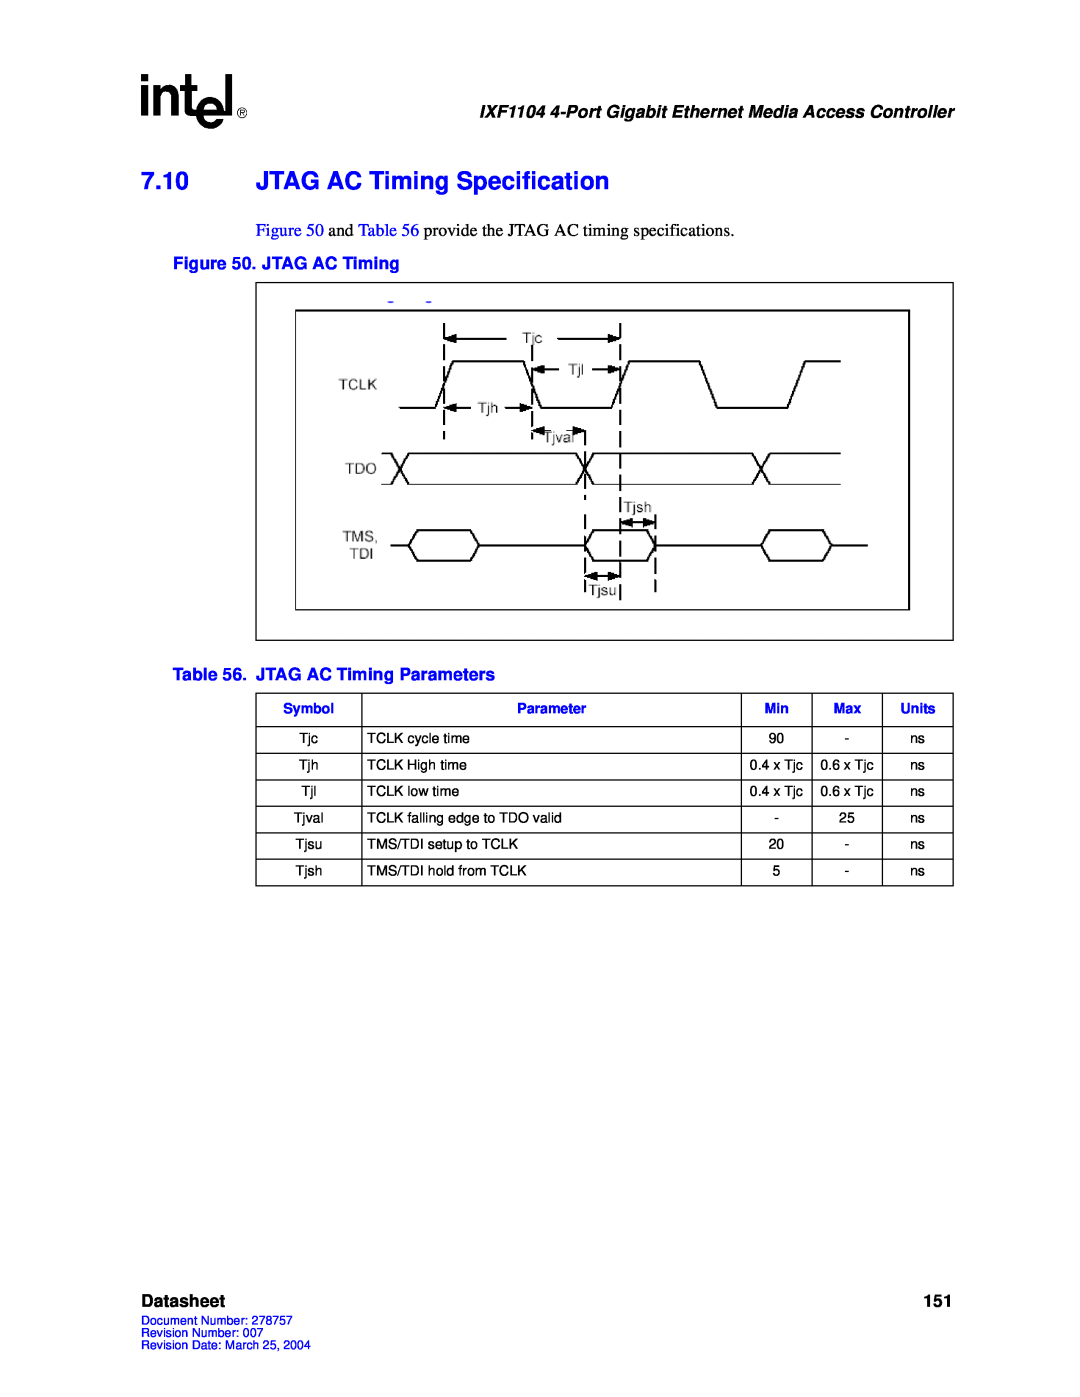 Intel IXF1104 manual 7.10JTAG AC Timing Specification, Datasheet 